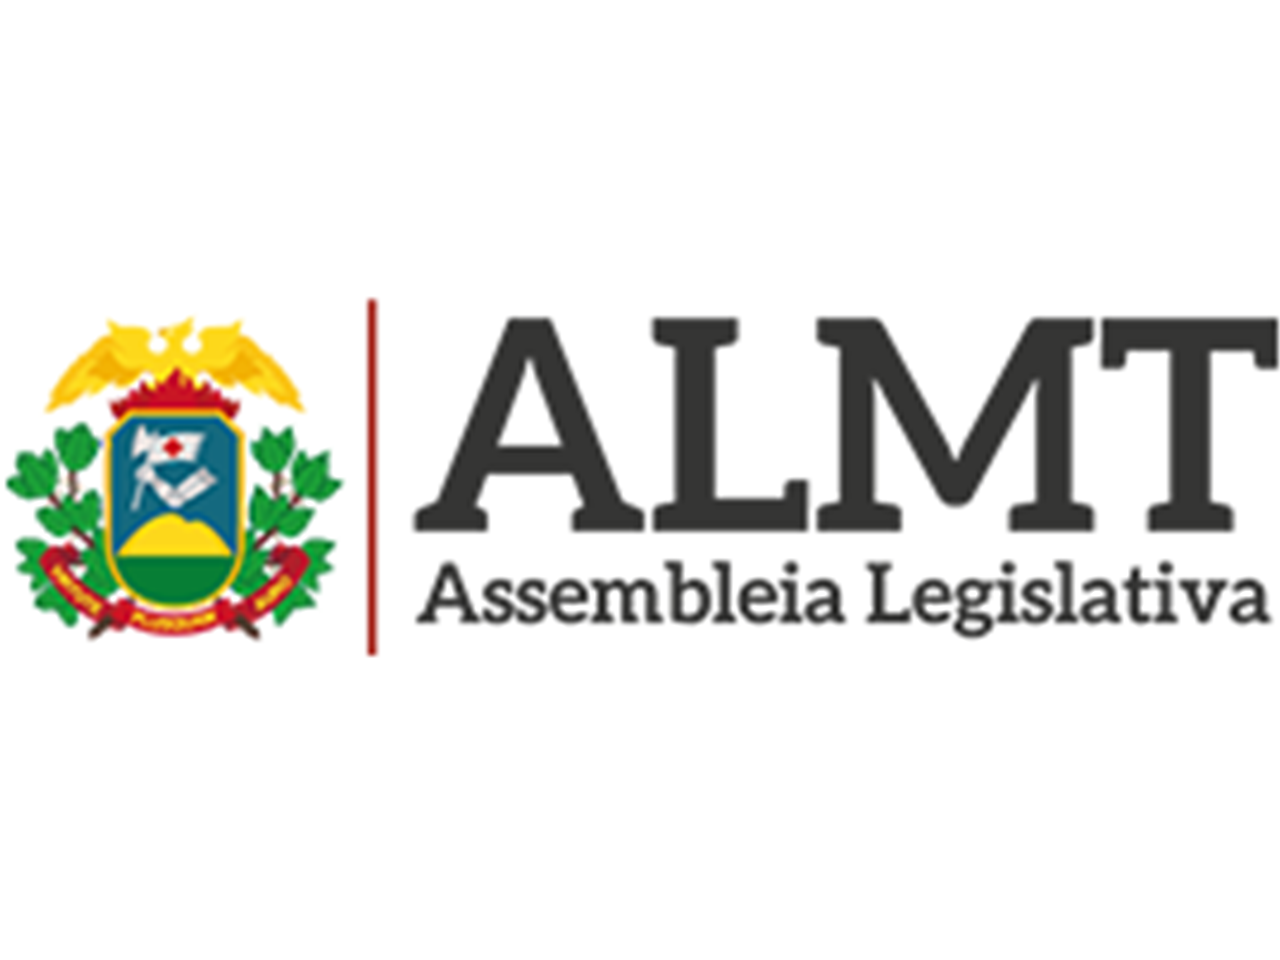 Assembleia Legislativa do Mato Grosso